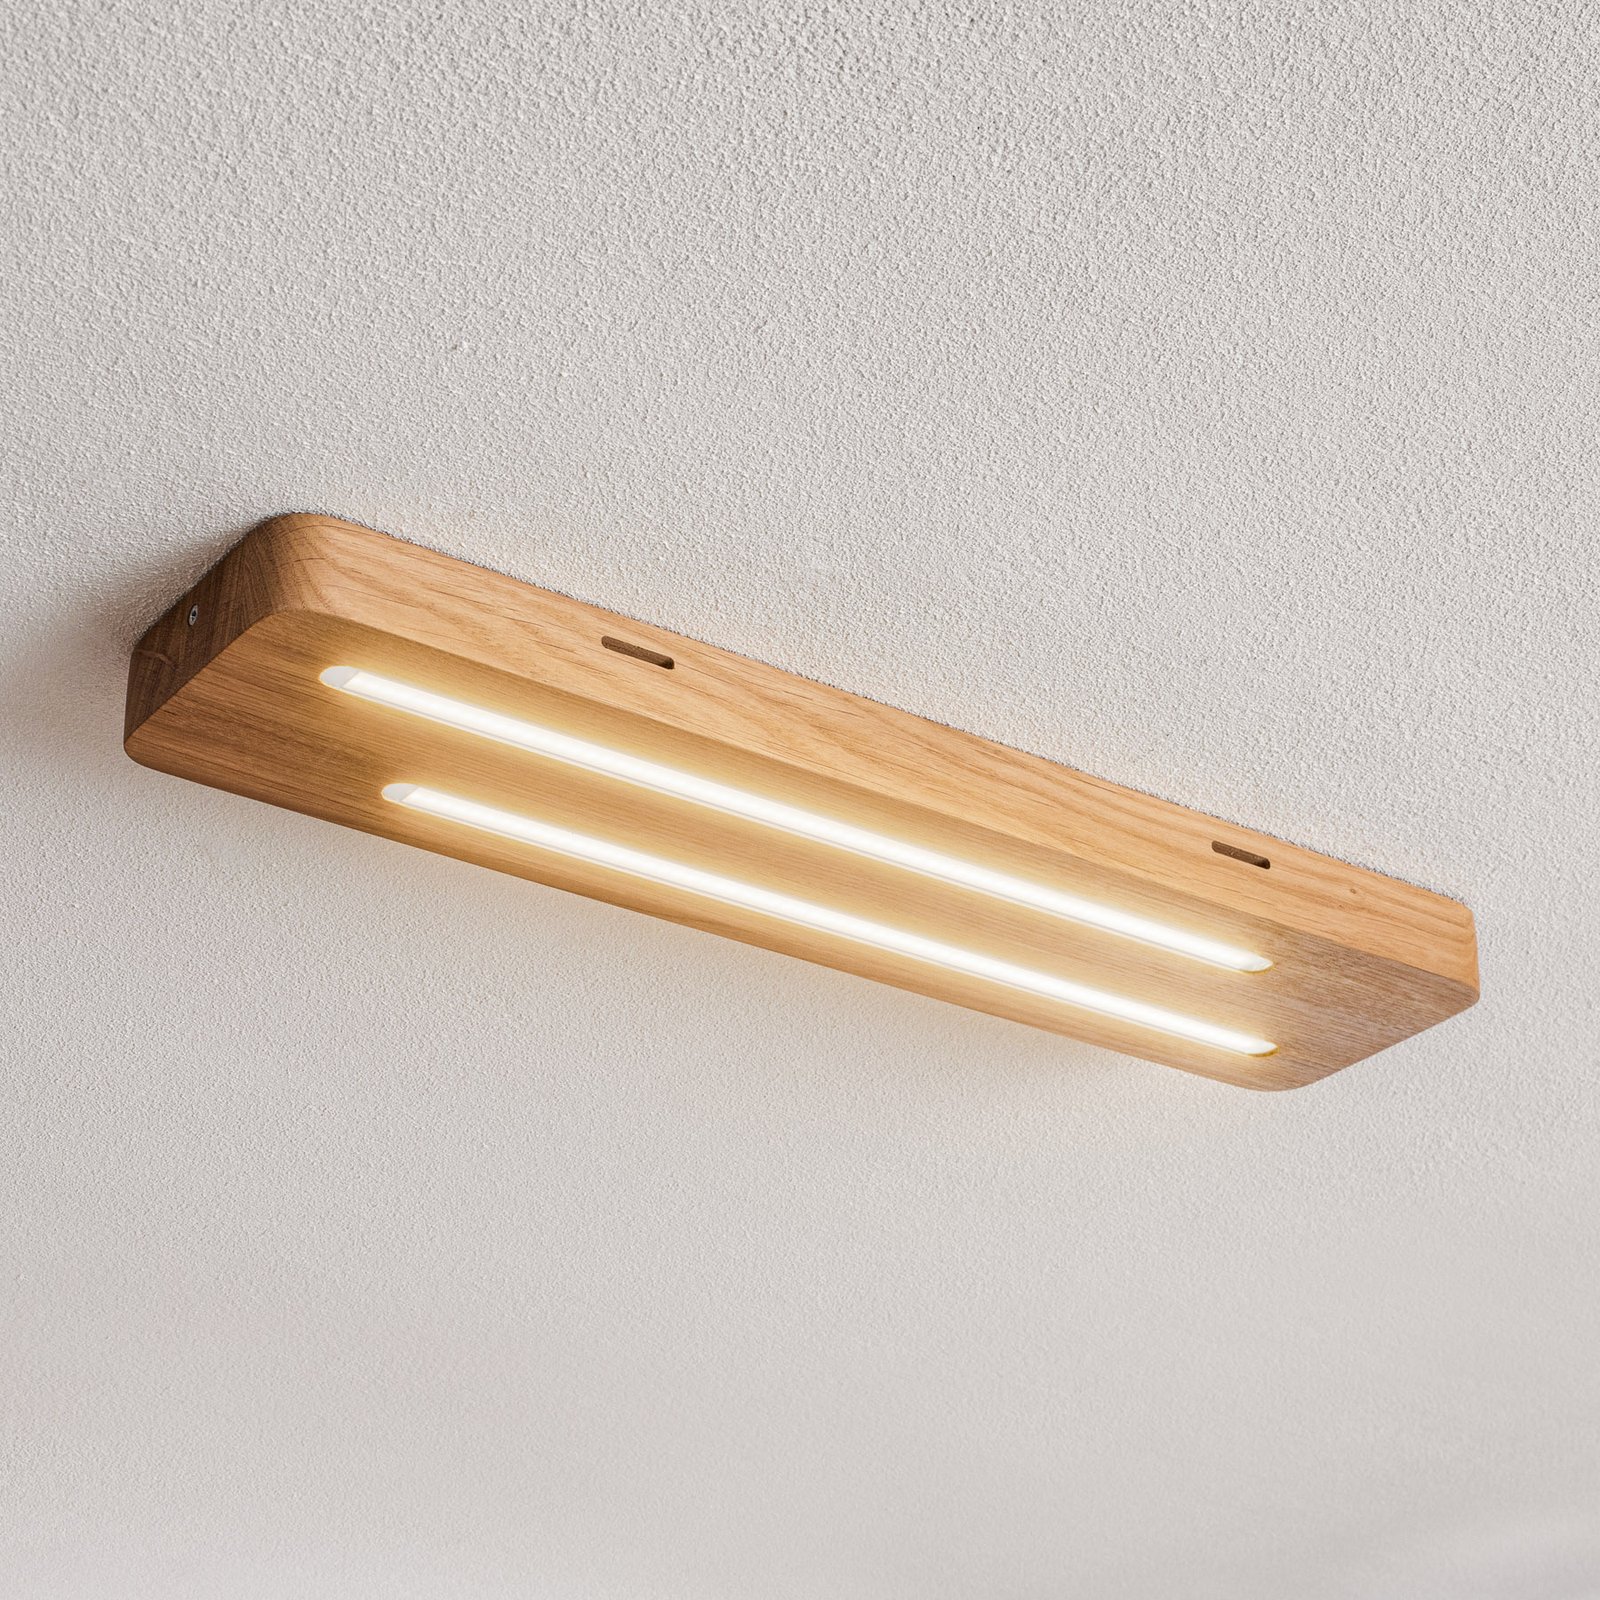 Neele - LED ceiling lamp with oak wood